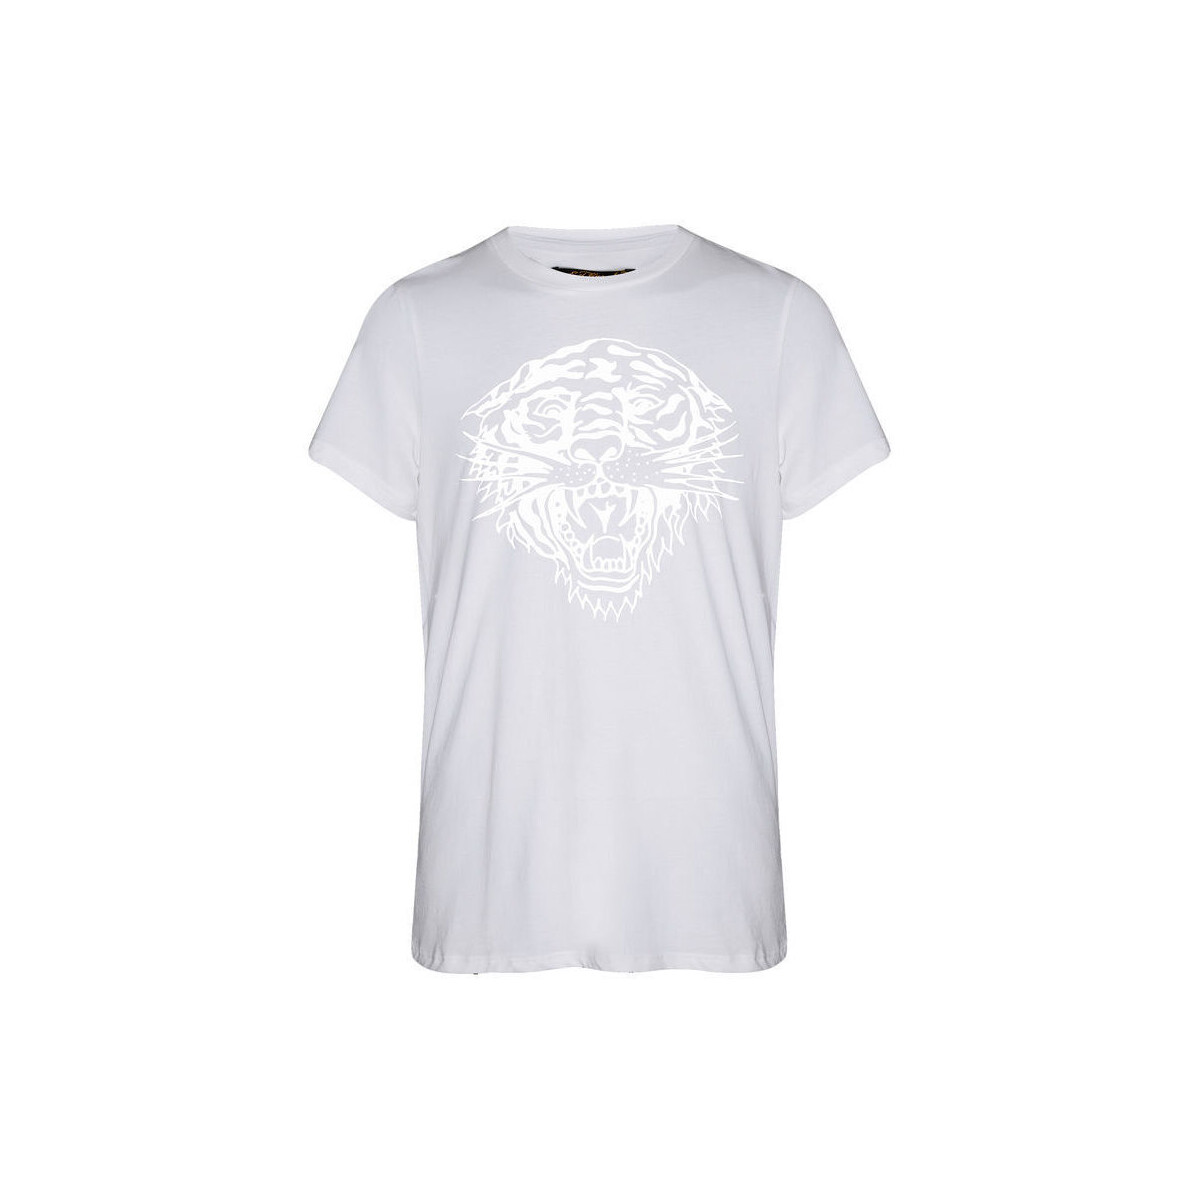 Abbigliamento Uomo T-shirt maniche corte Ed Hardy Tiger glow tape crop tank top white Bianco